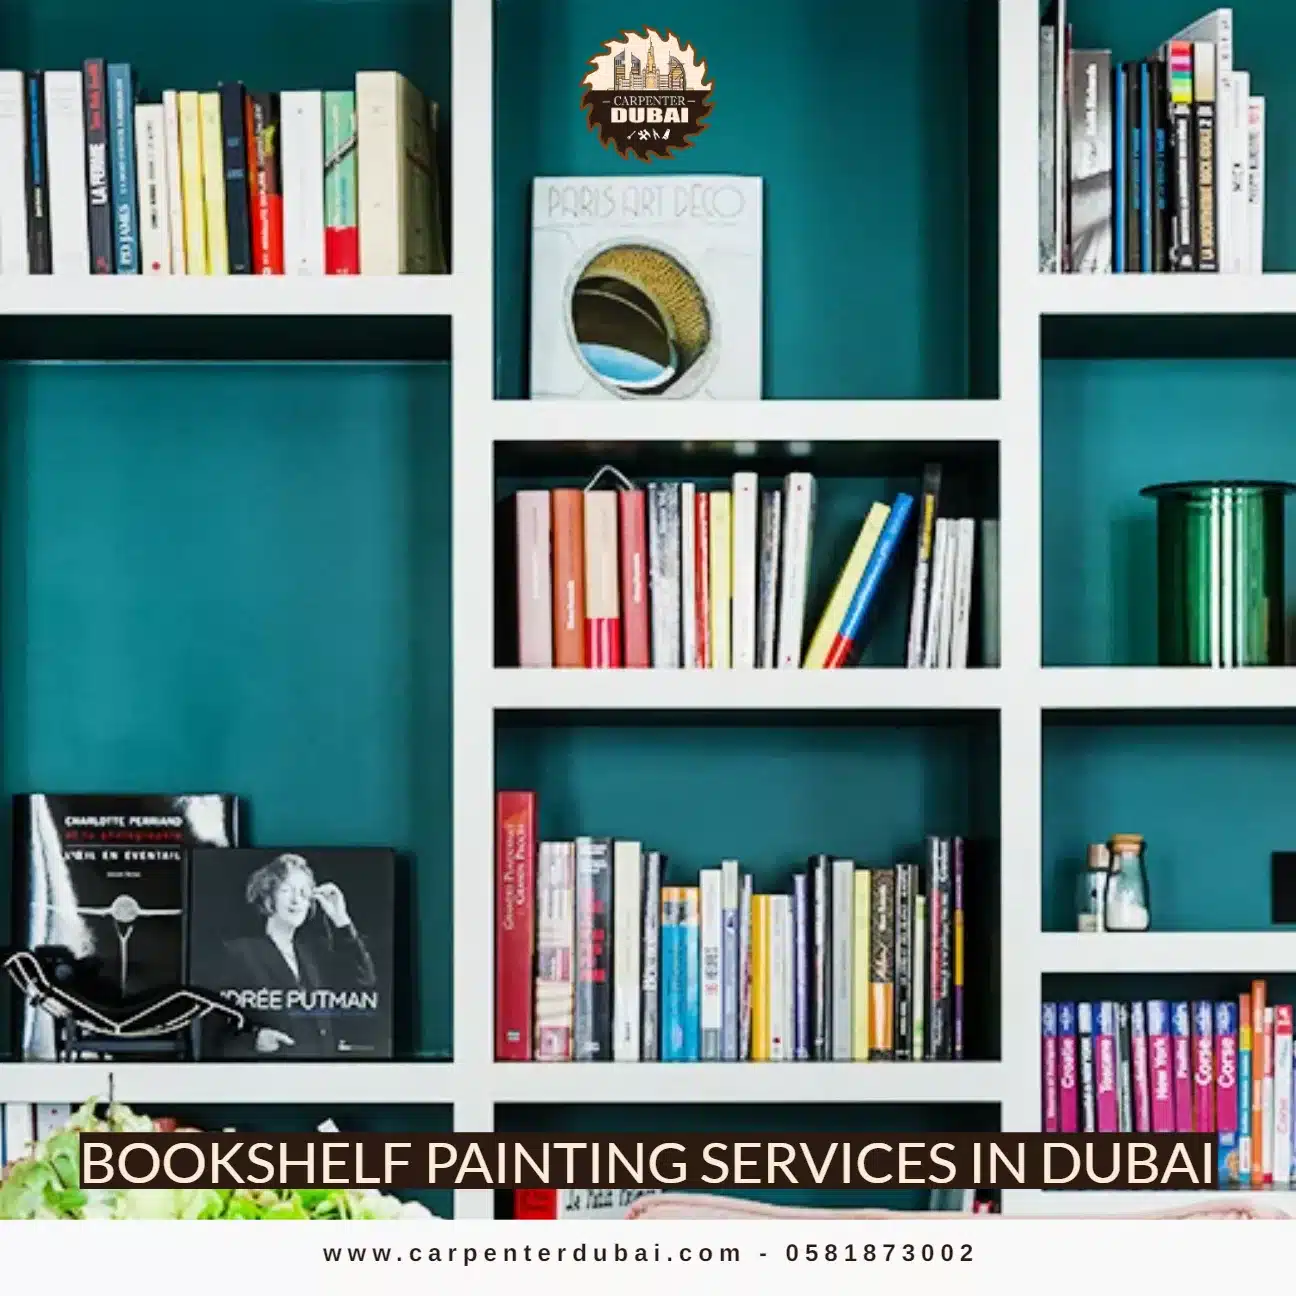 Bookshelf Painting Services in Dubai